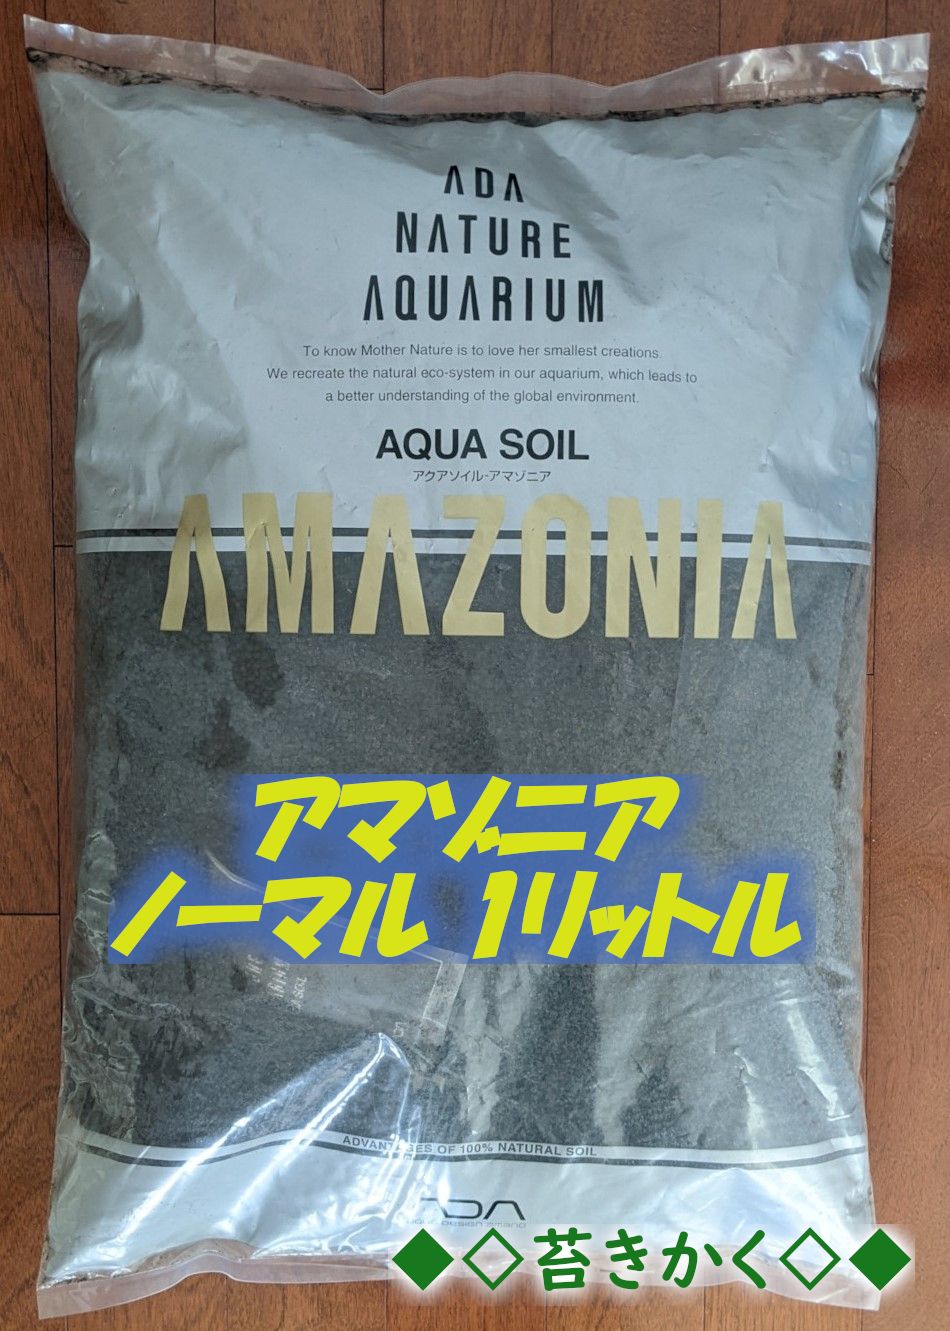 ADA アクアソイルアマゾニア - 魚用品